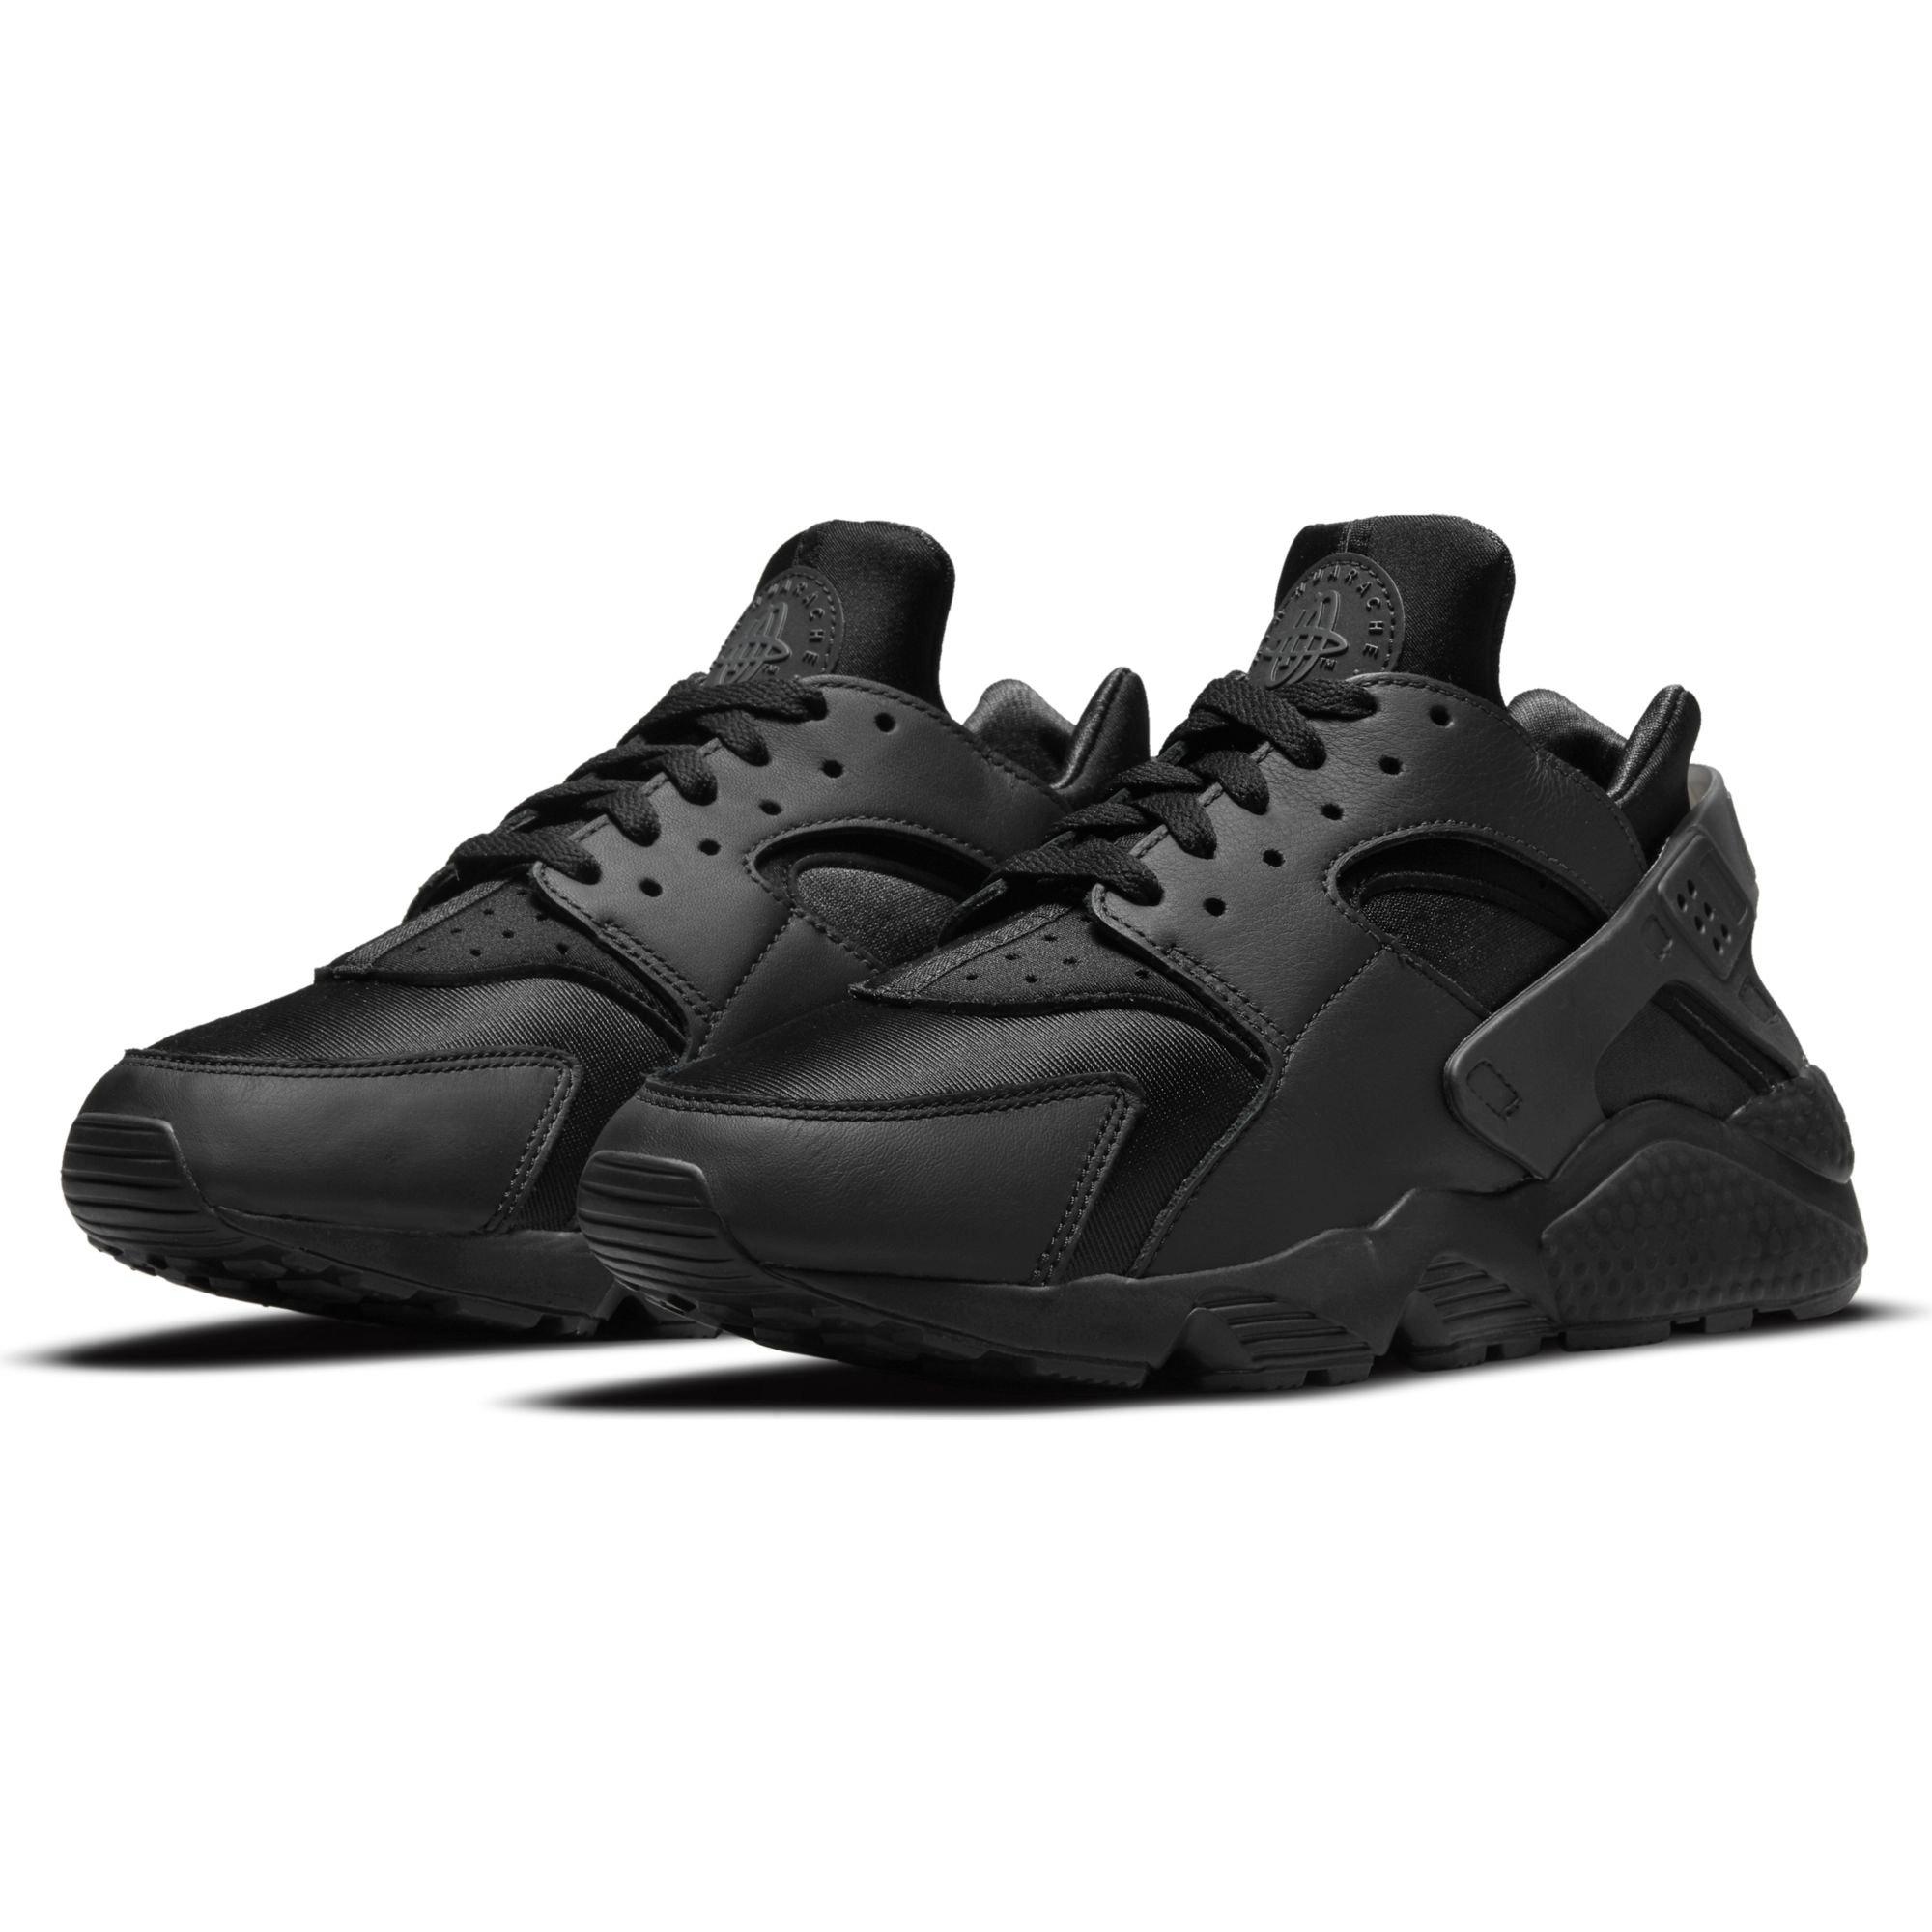 montage frø momentum Nike Air Huarache "Black/Anthracite" Men's Shoe